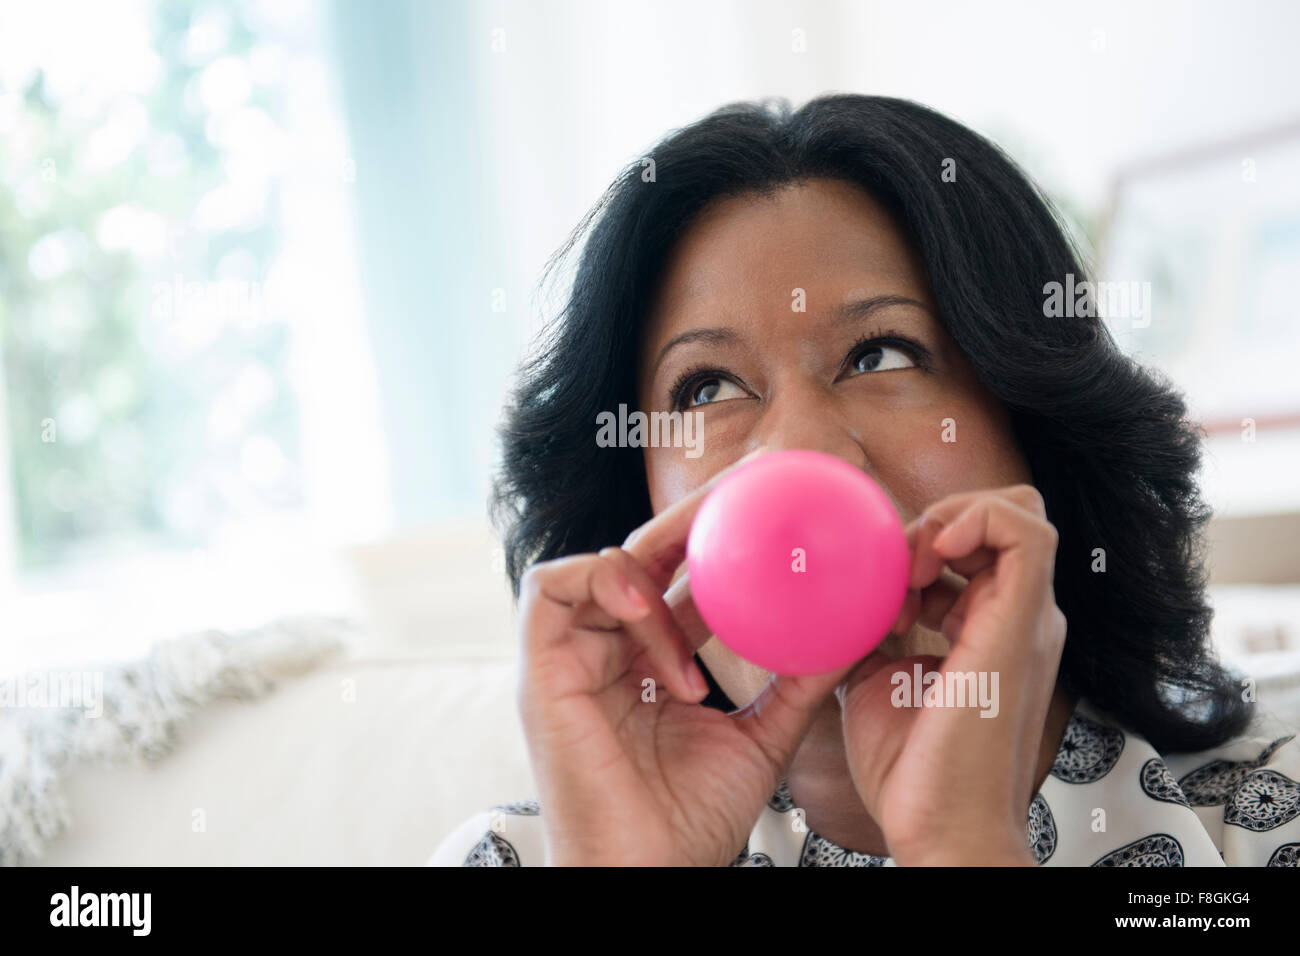 Black woman inflating balloon Stock Photo